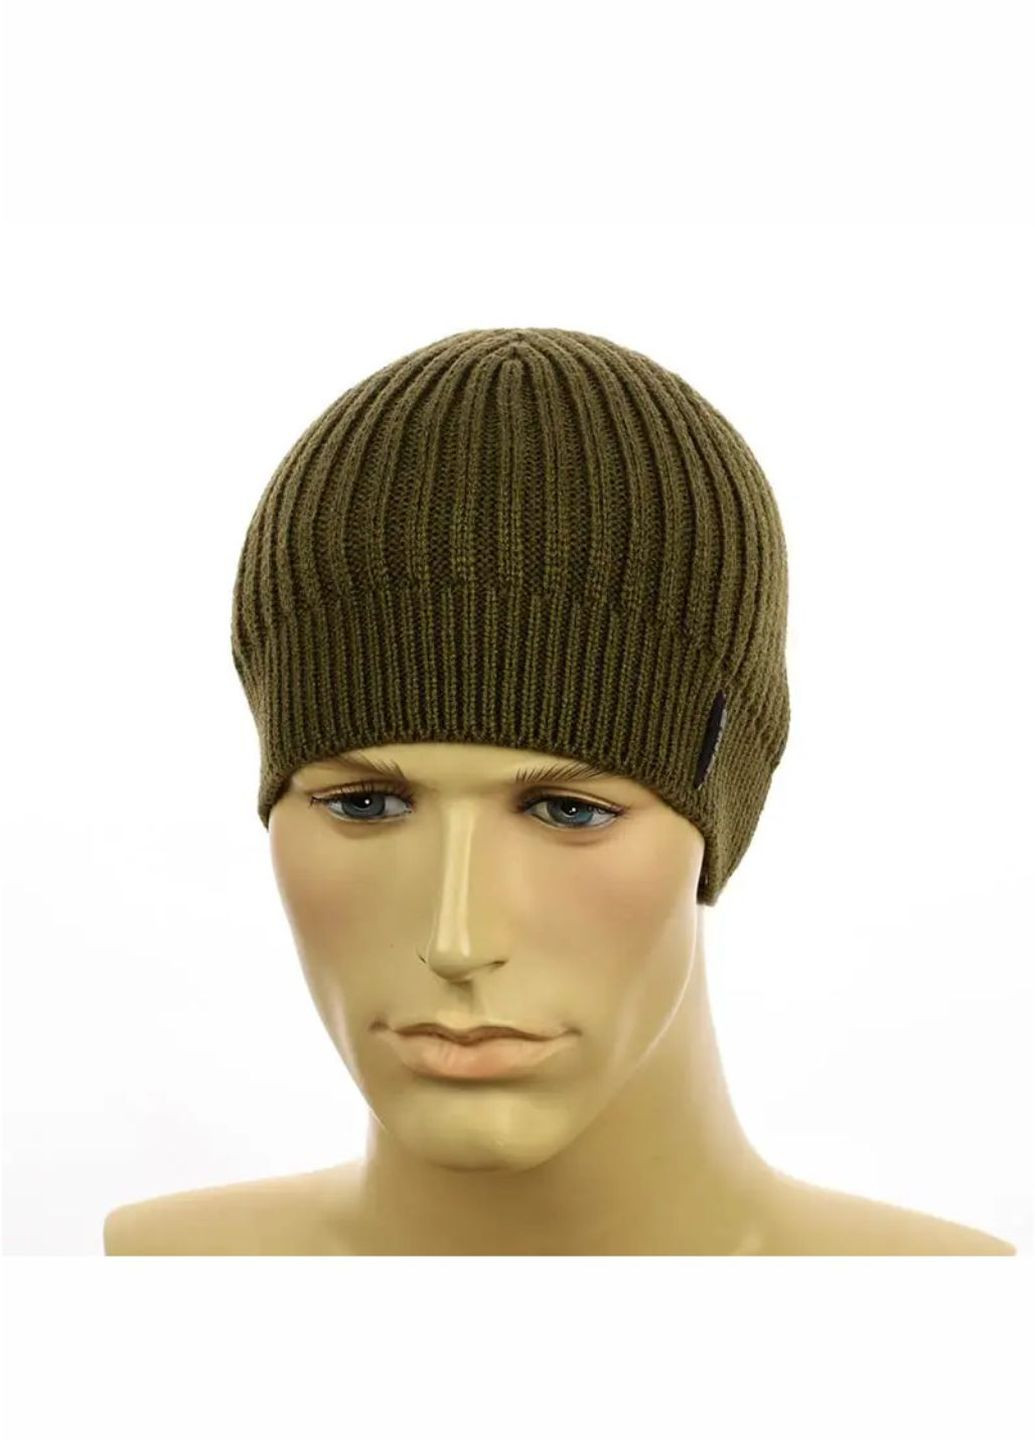 Мужская зимняя шапка на флисе No Brand мужская шапка без отворота (276534551)